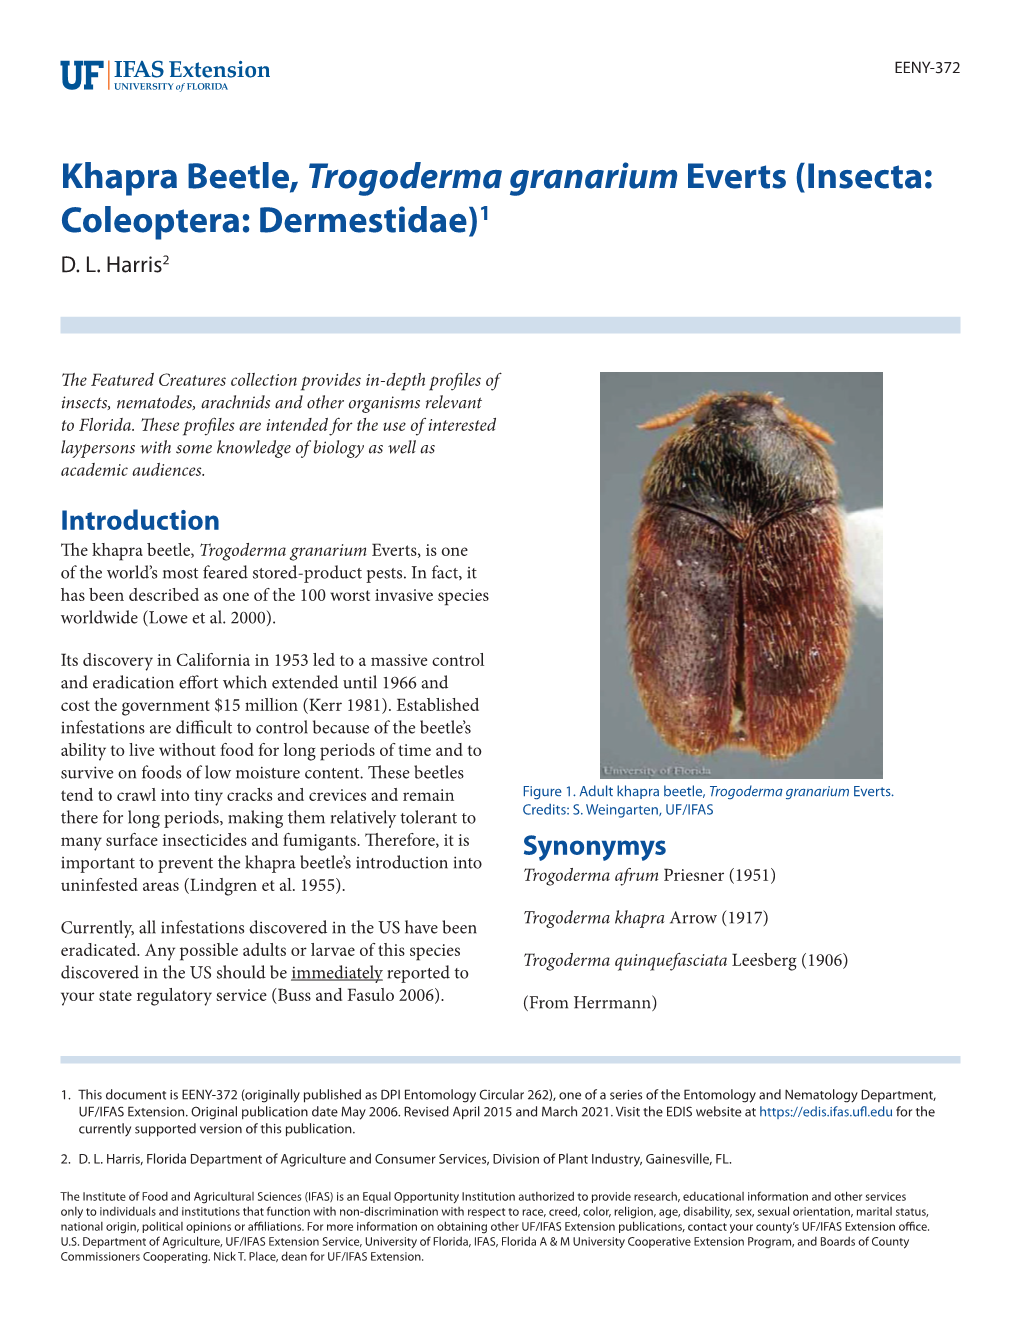 Khapra Beetle, Trogoderma Granarium Everts (Insecta: Coleoptera: Dermestidae)1 D